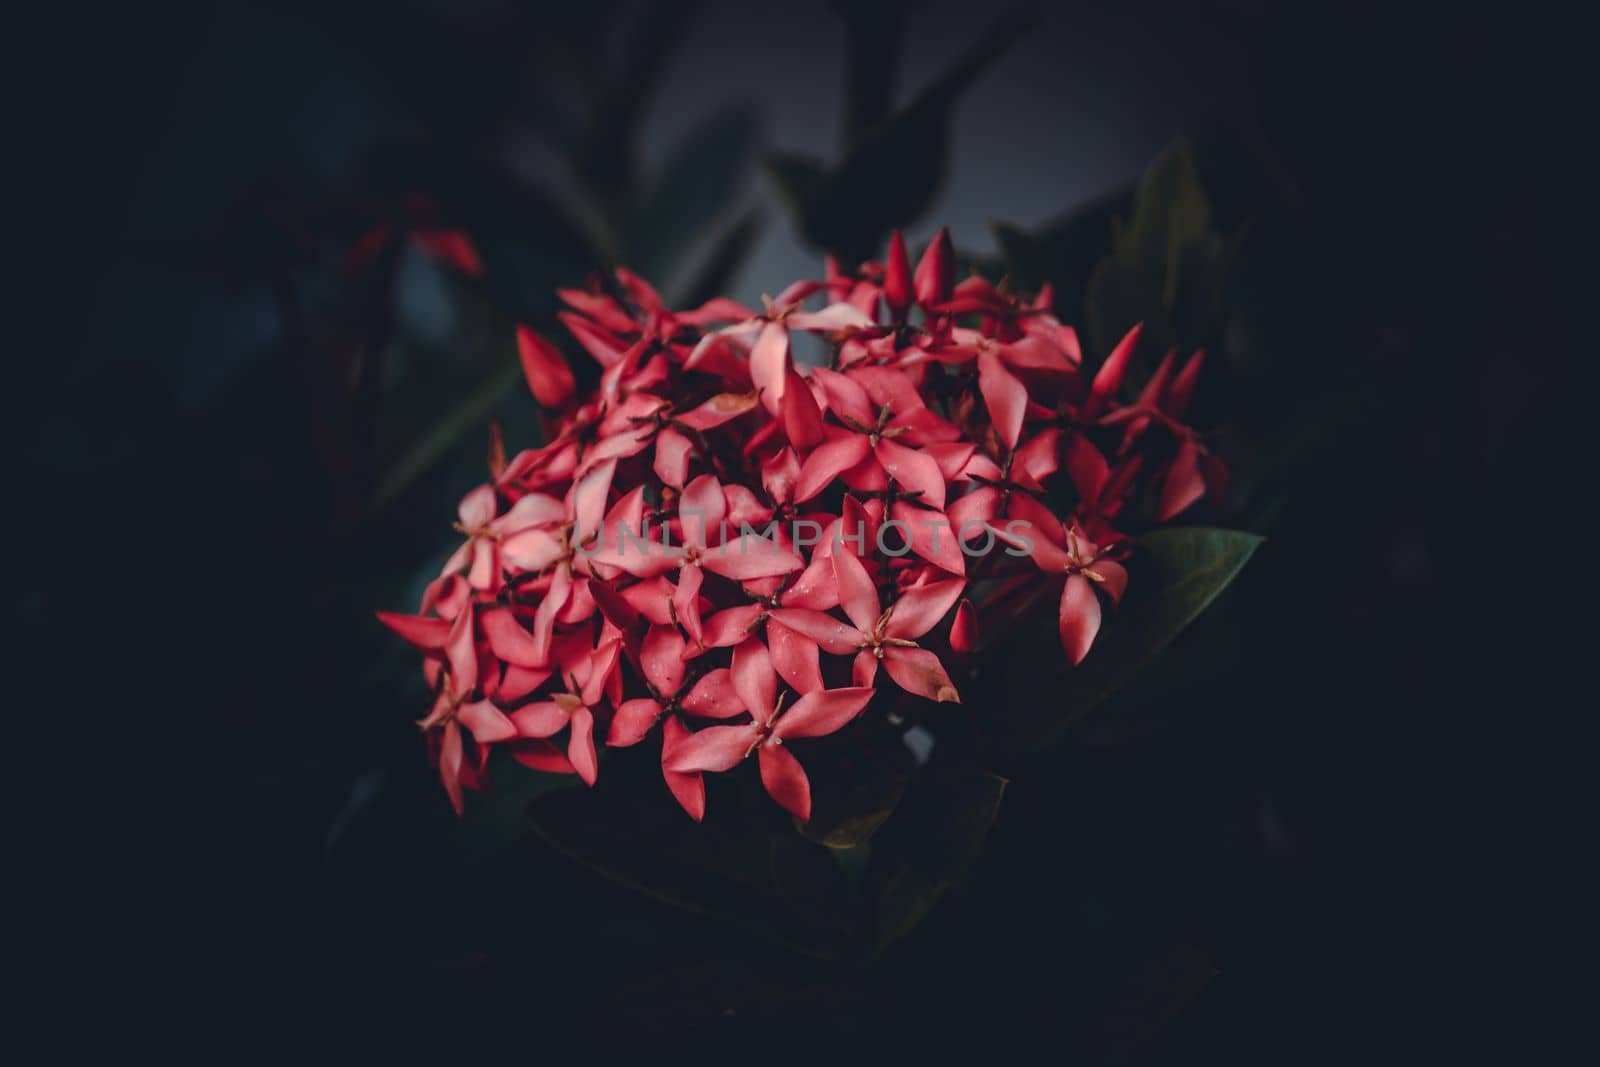 Chinese ixora, Ixora chinensis, West Indian Jasmine flower in the garden by abdulkayum97